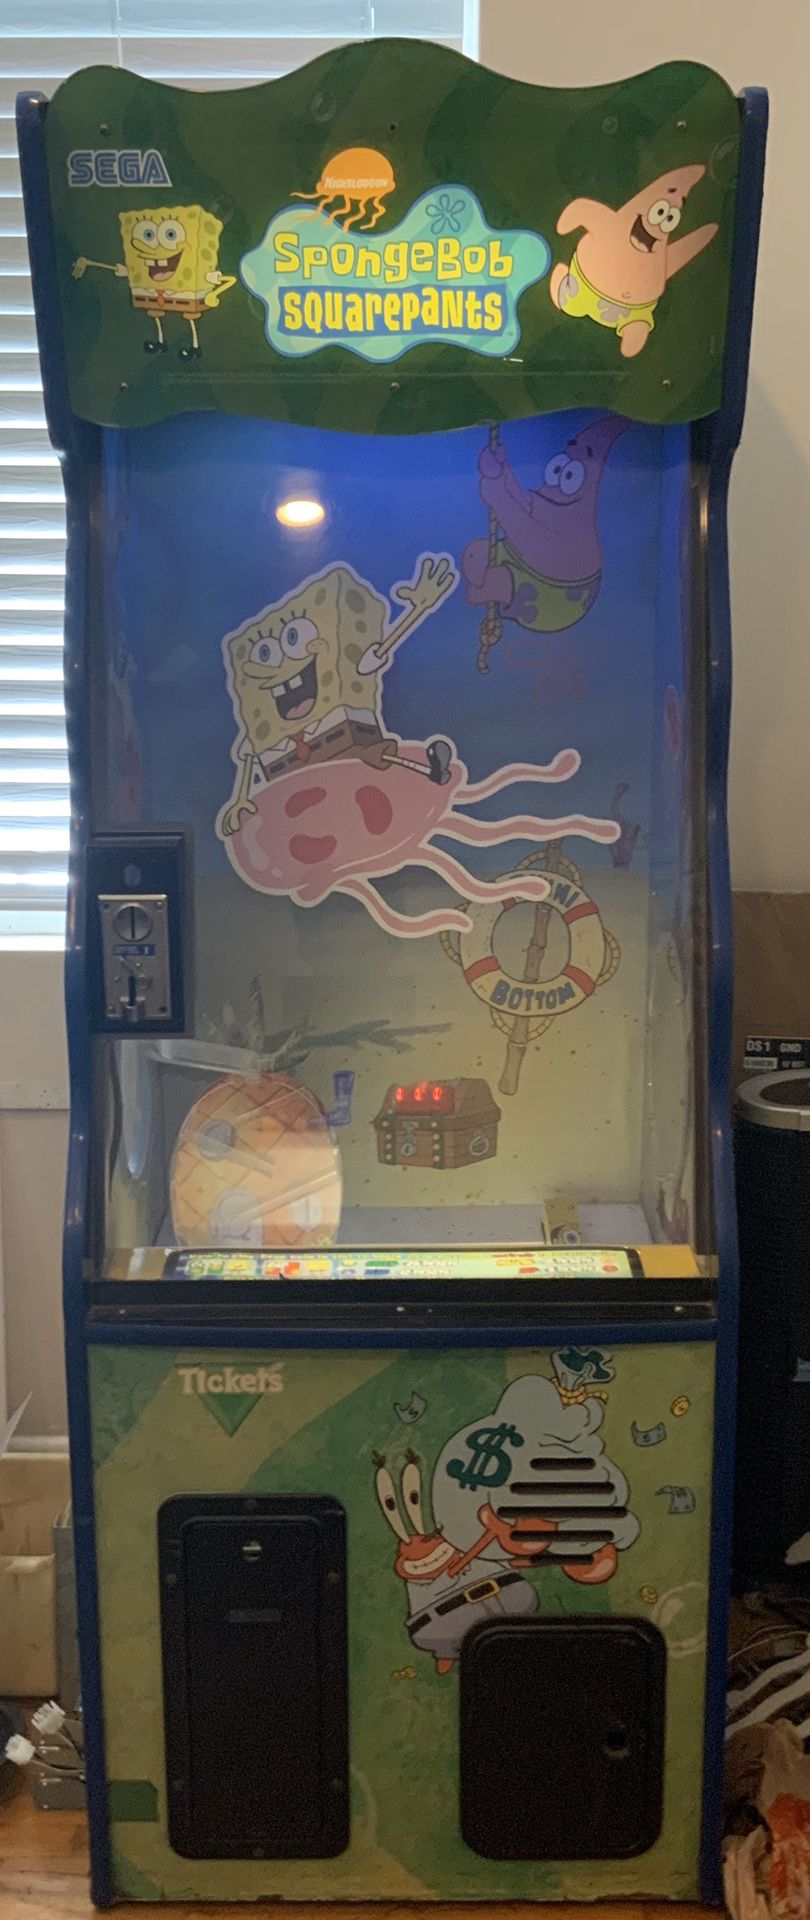 Sega Spongebob Redemption Token Arcade Game